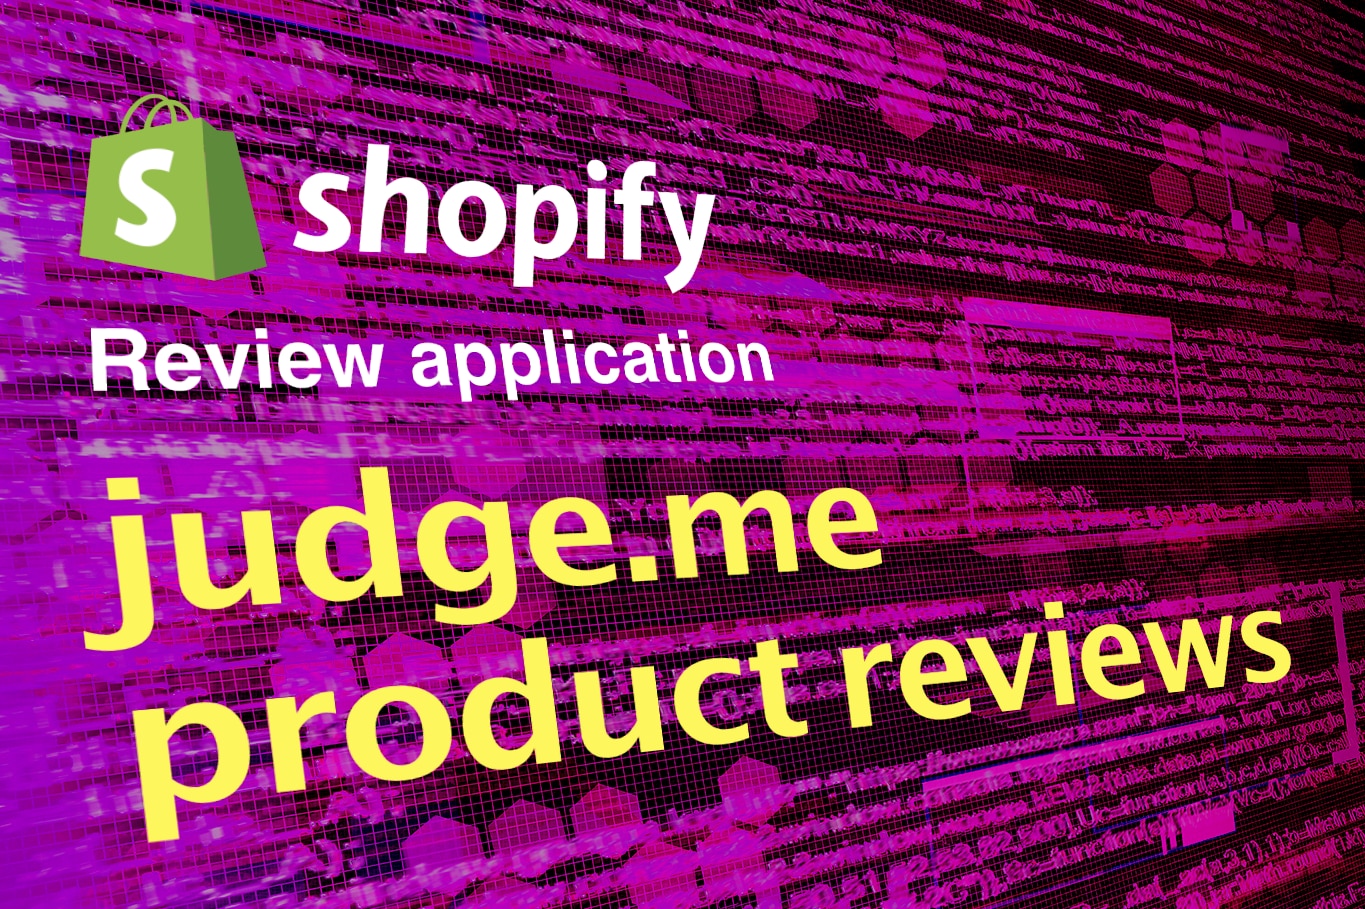 Shopify　ショッピファイ　ショピファイ　レビューアプリ　Judge.me Product Reviews